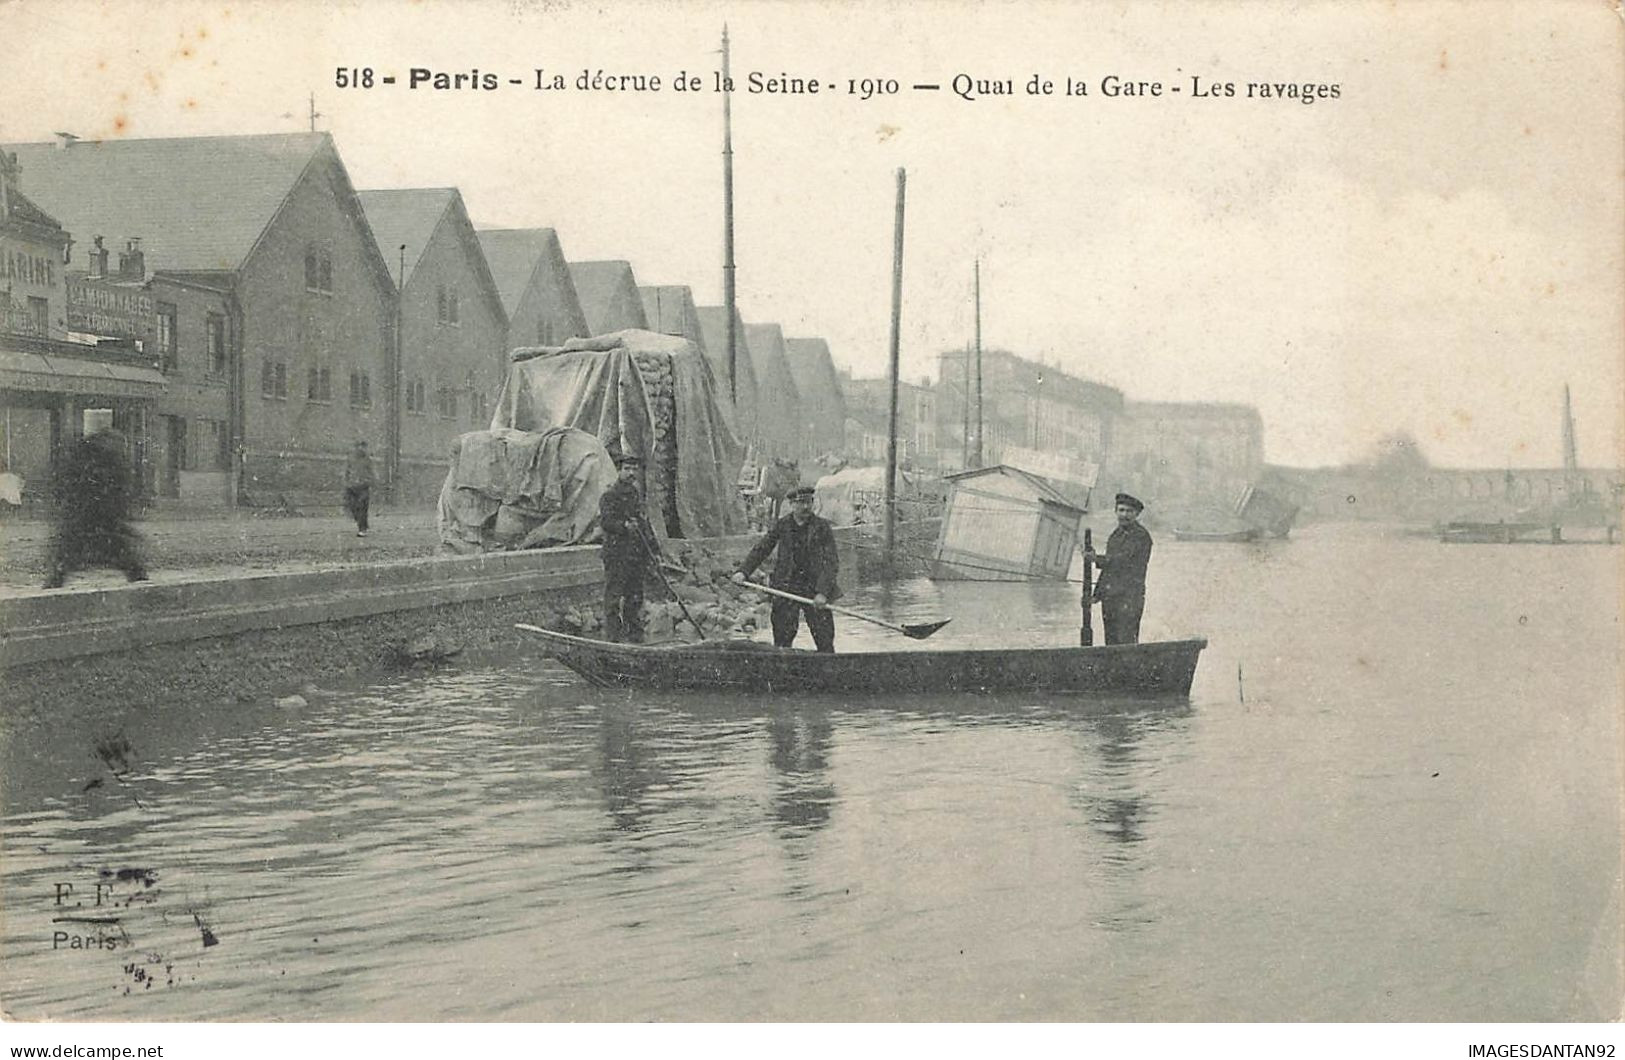 75 PARIS 12 #23034 DECRUE DE LA SEINE INONDATIONS 1910 QUAI DE LA GARE LES RAVAGES BARQUE CANOT - Paris (12)